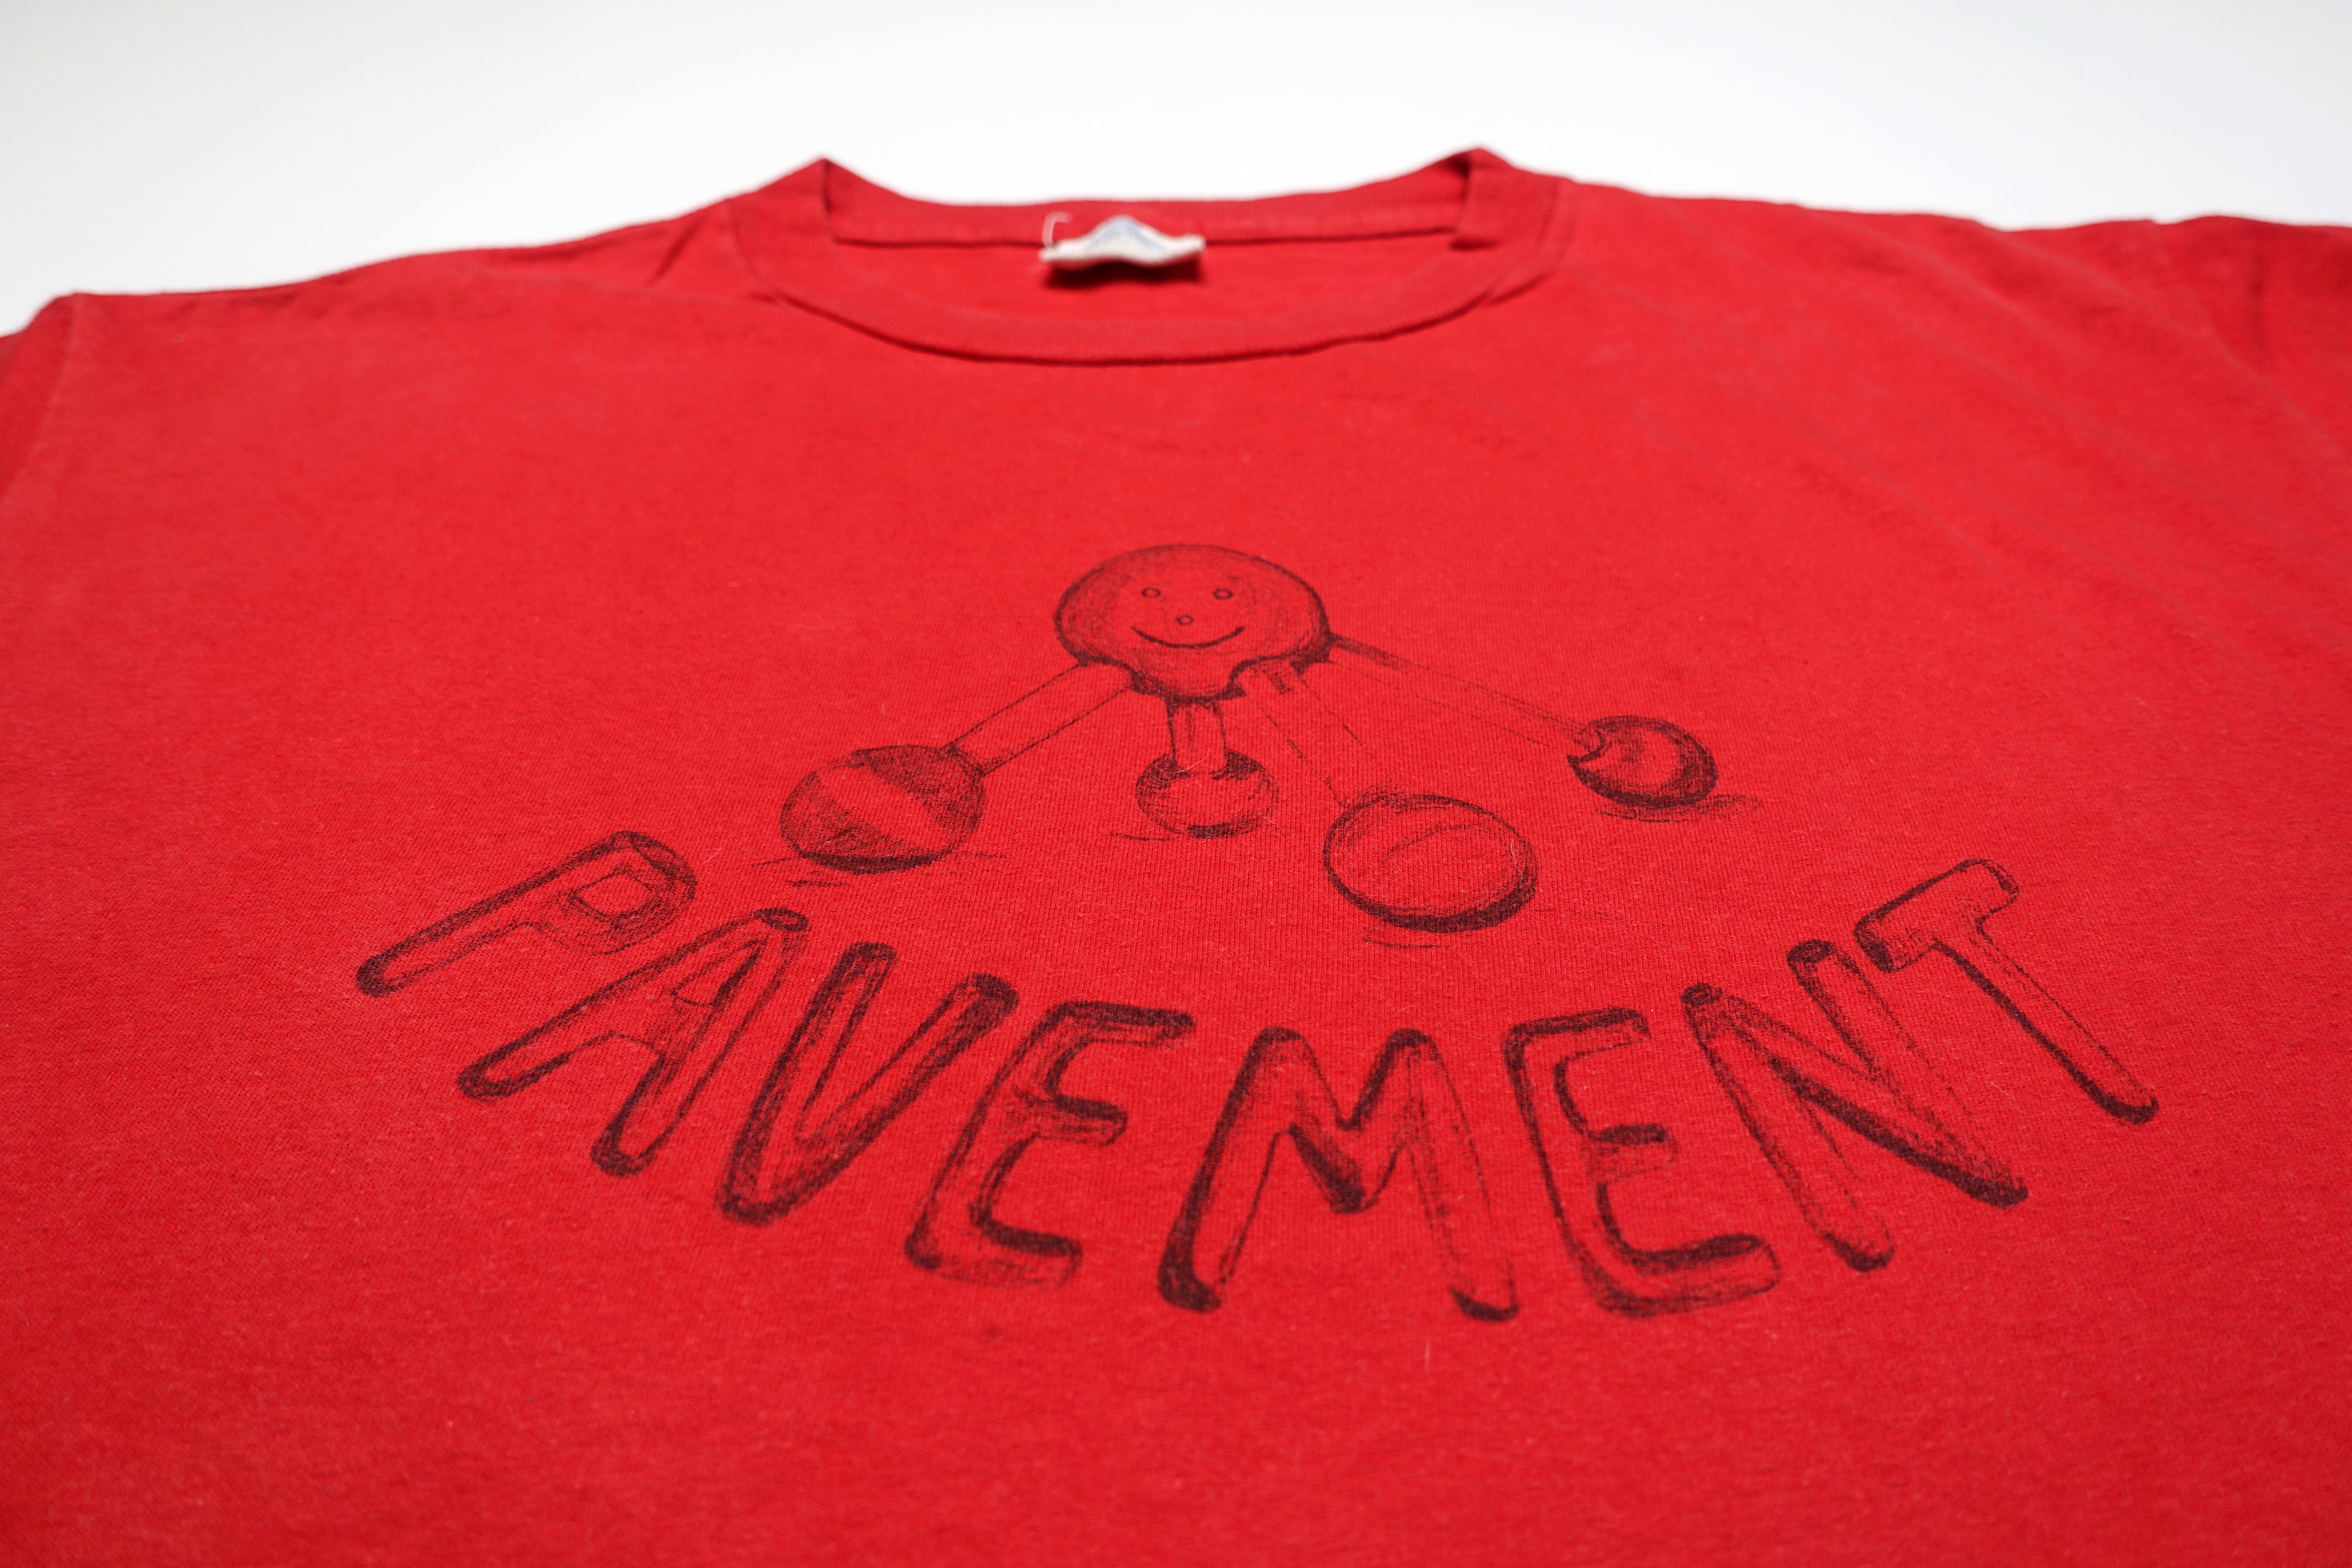 Pavement - Pavement Massager 90's Tour Shirt Size XL